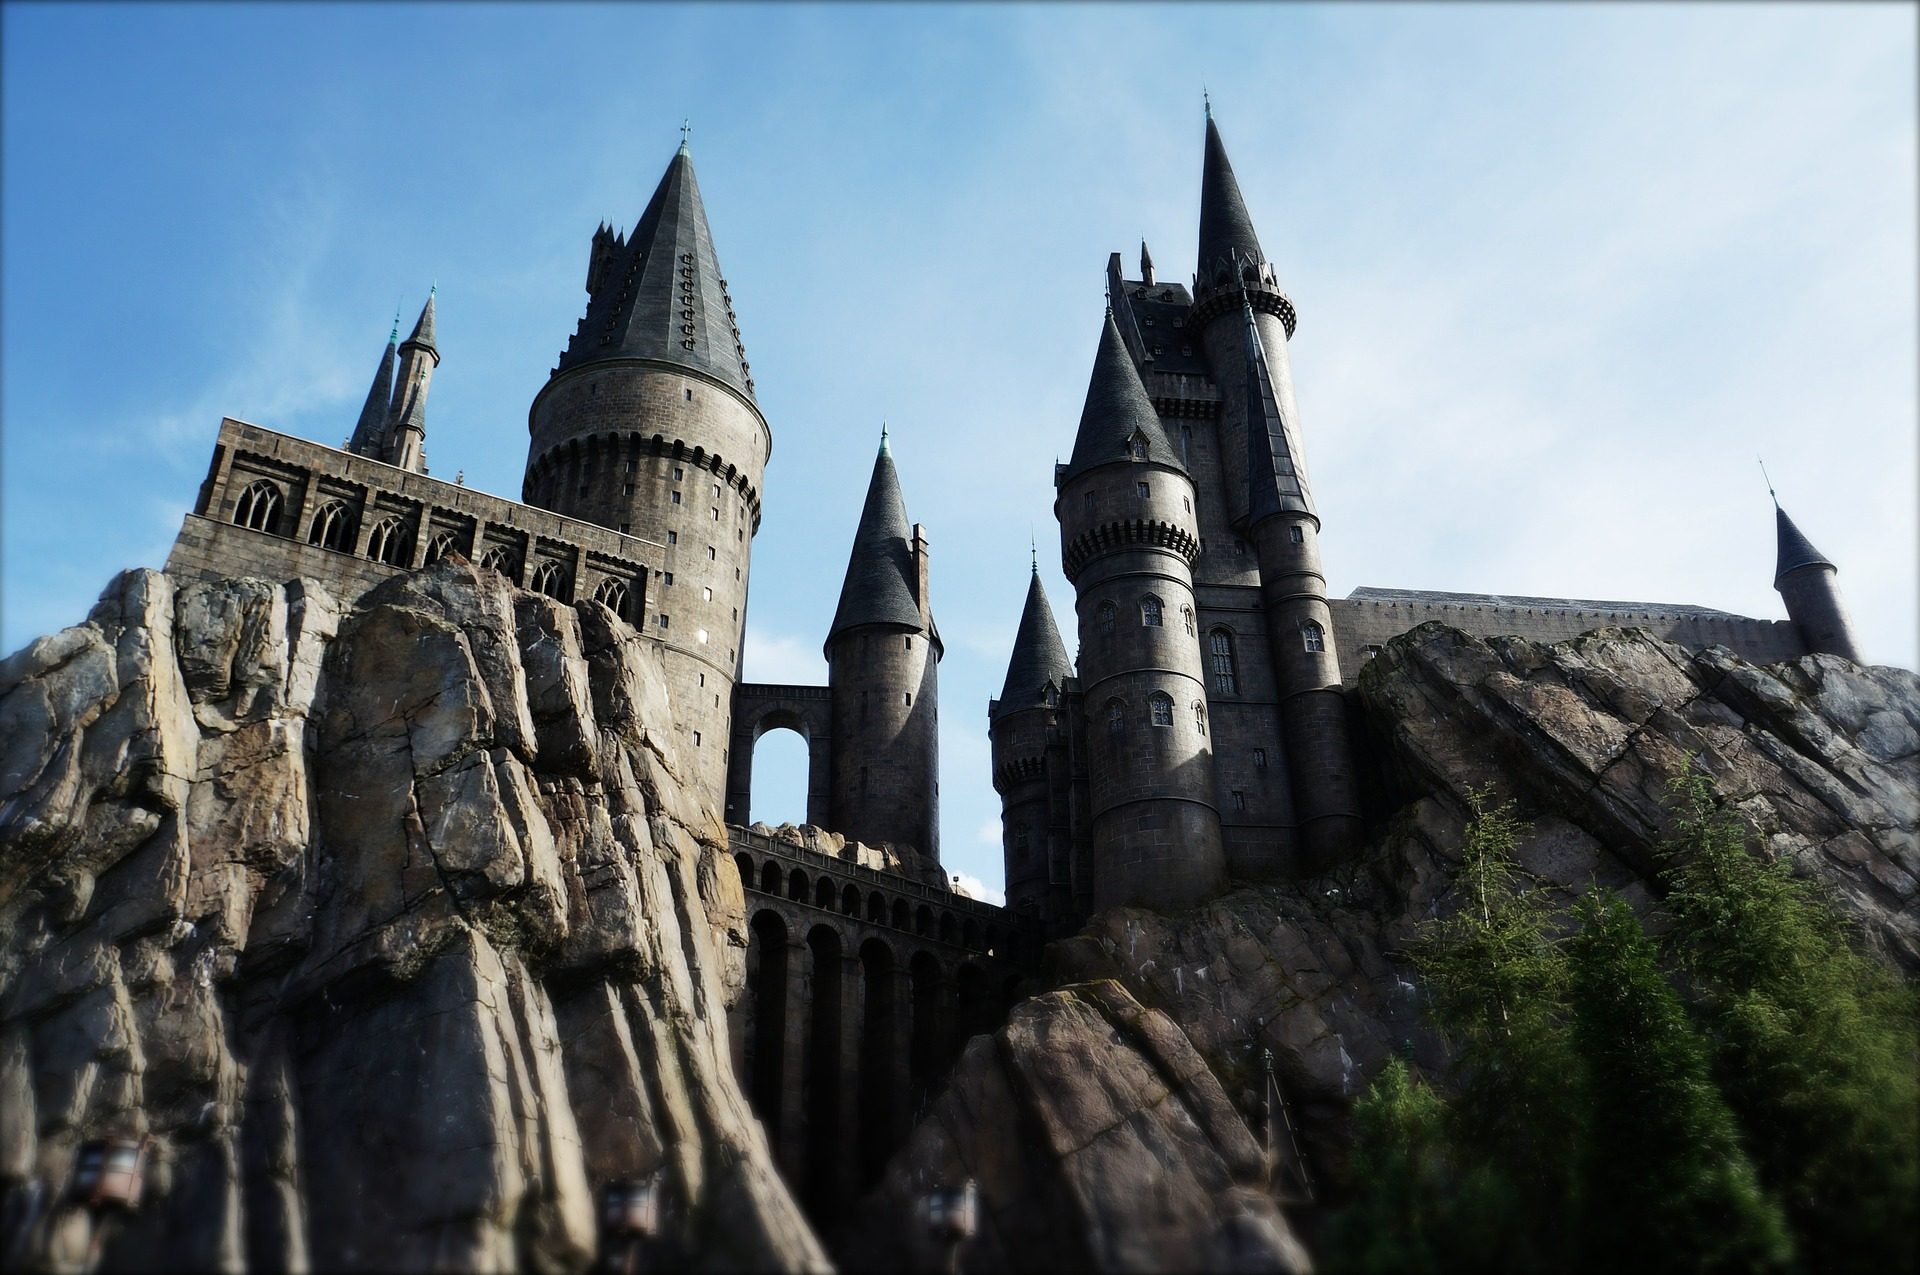 Reise The Making of Harry Potter Tour günstig ab 142,69€ Flug + Hotel + Ticket